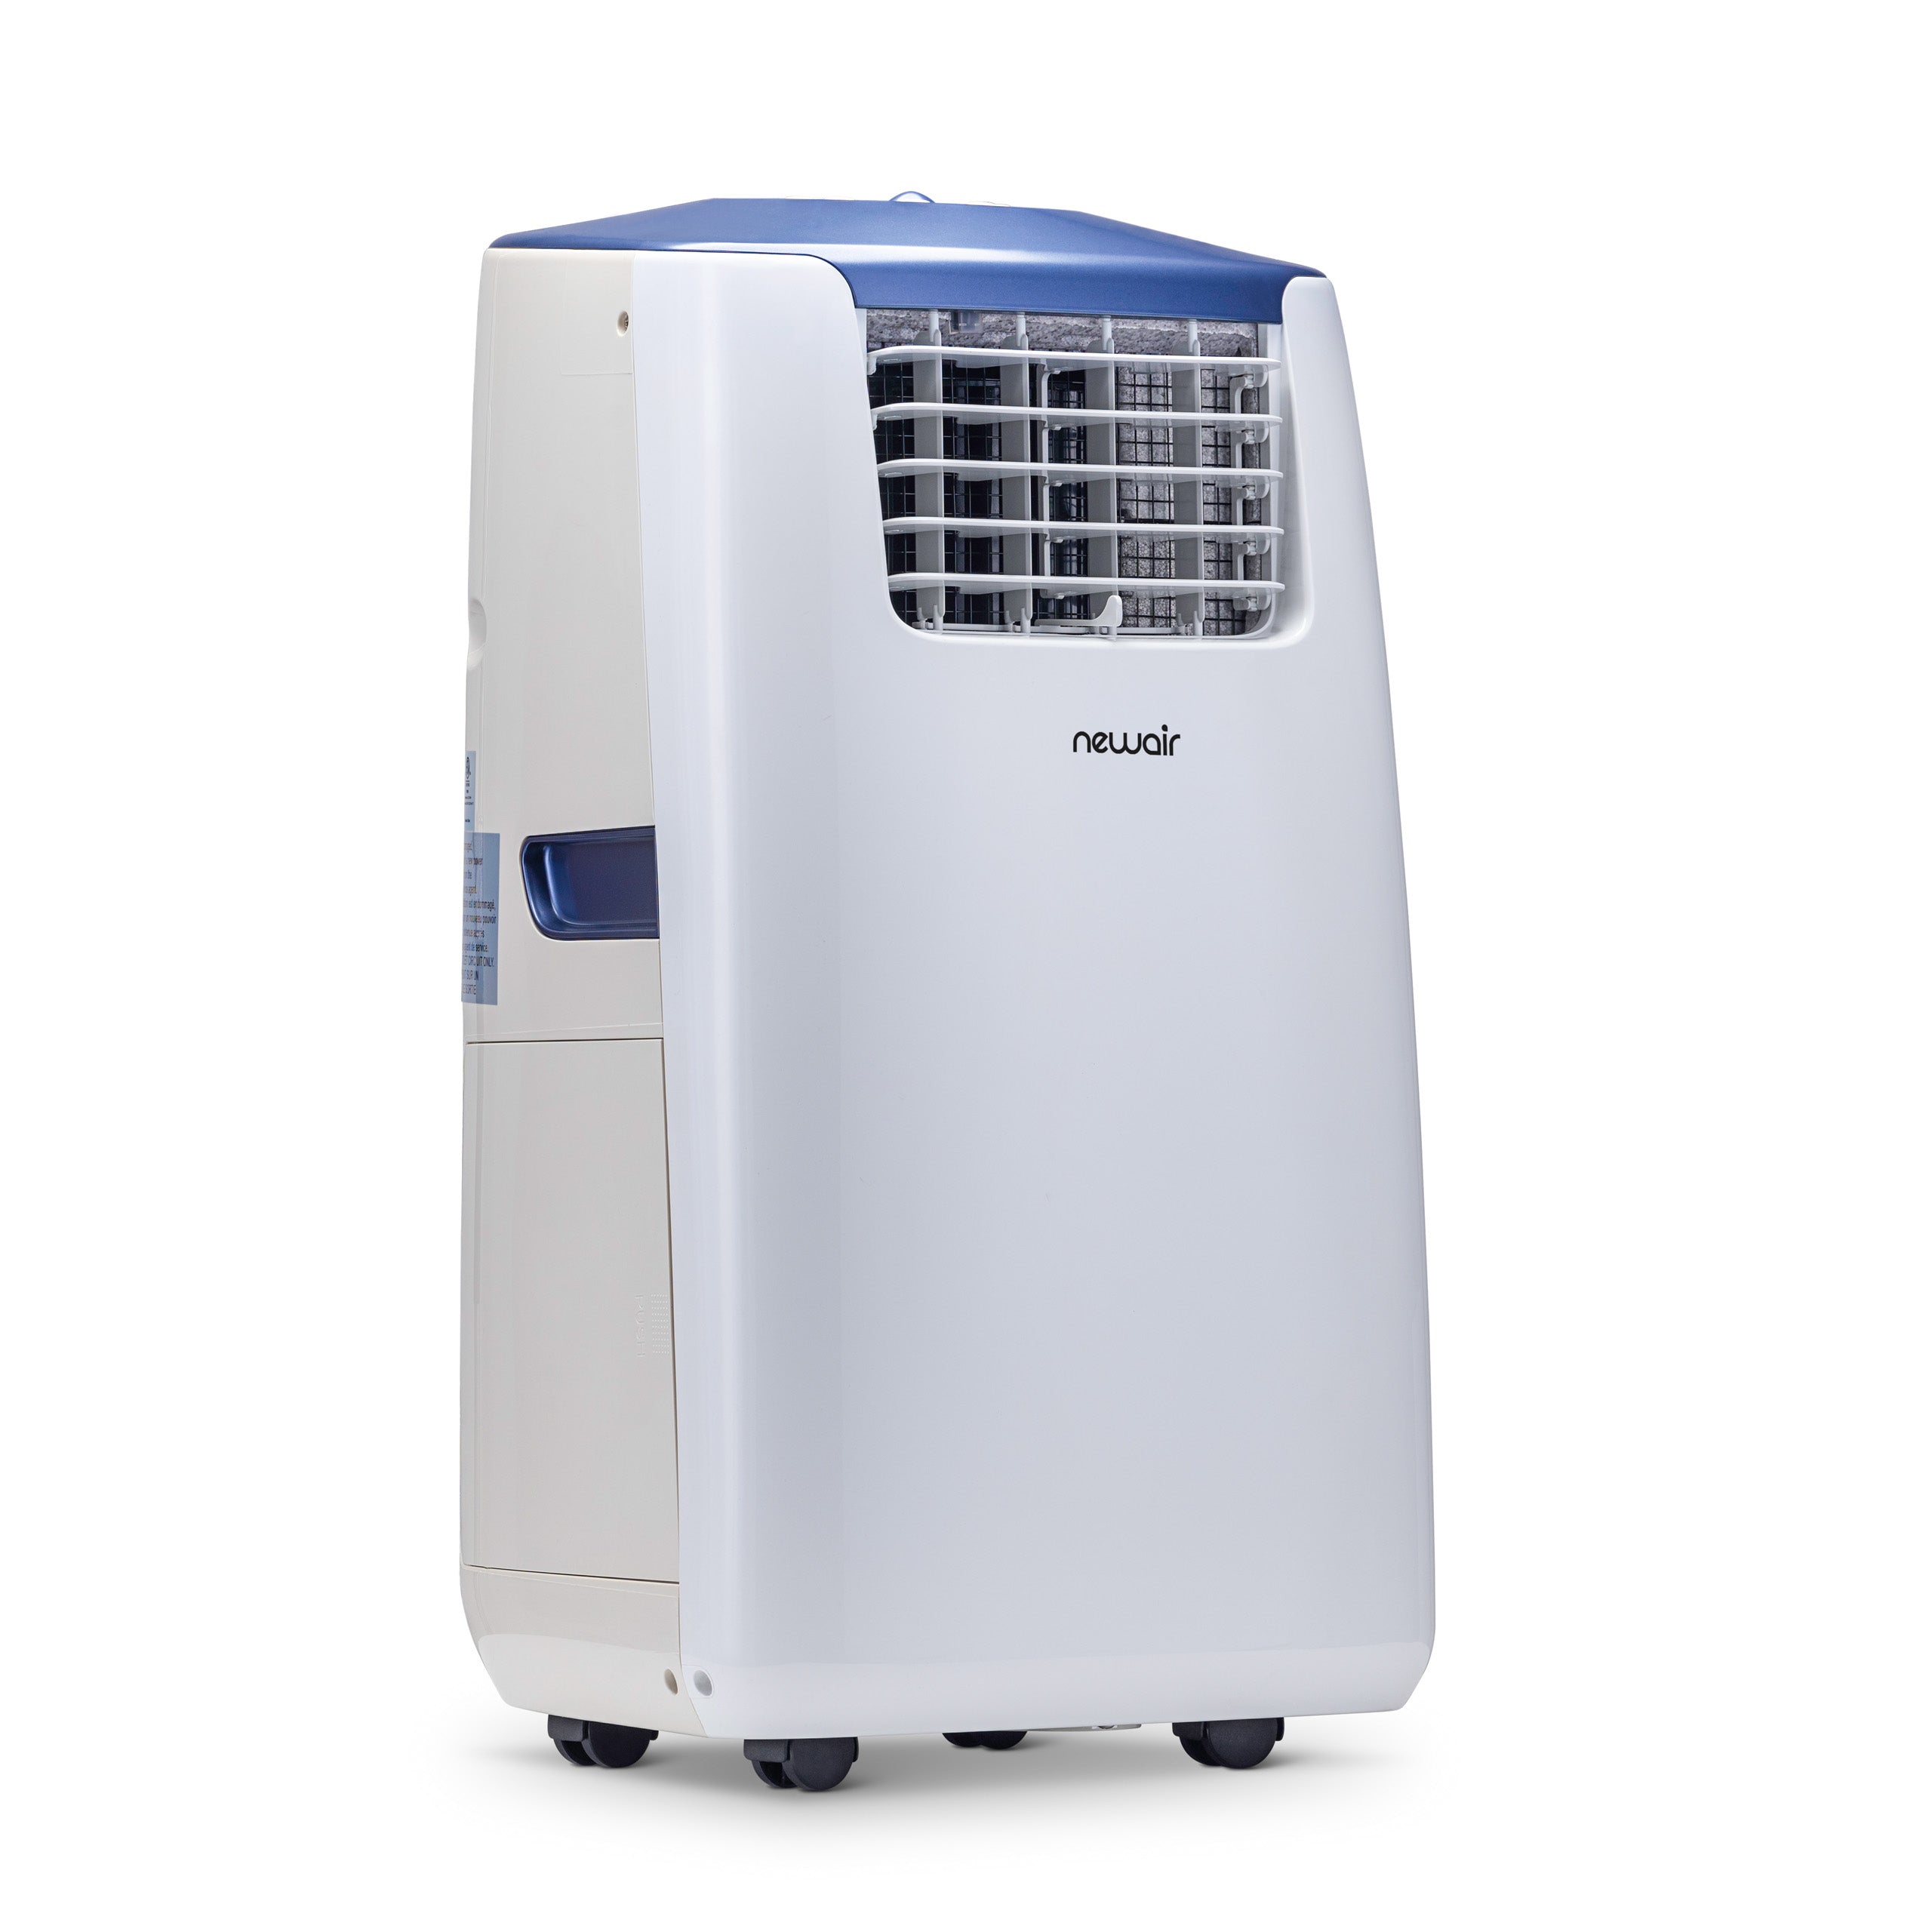 Newair Portable Air Conditioner with Heater - 8,600 BTU